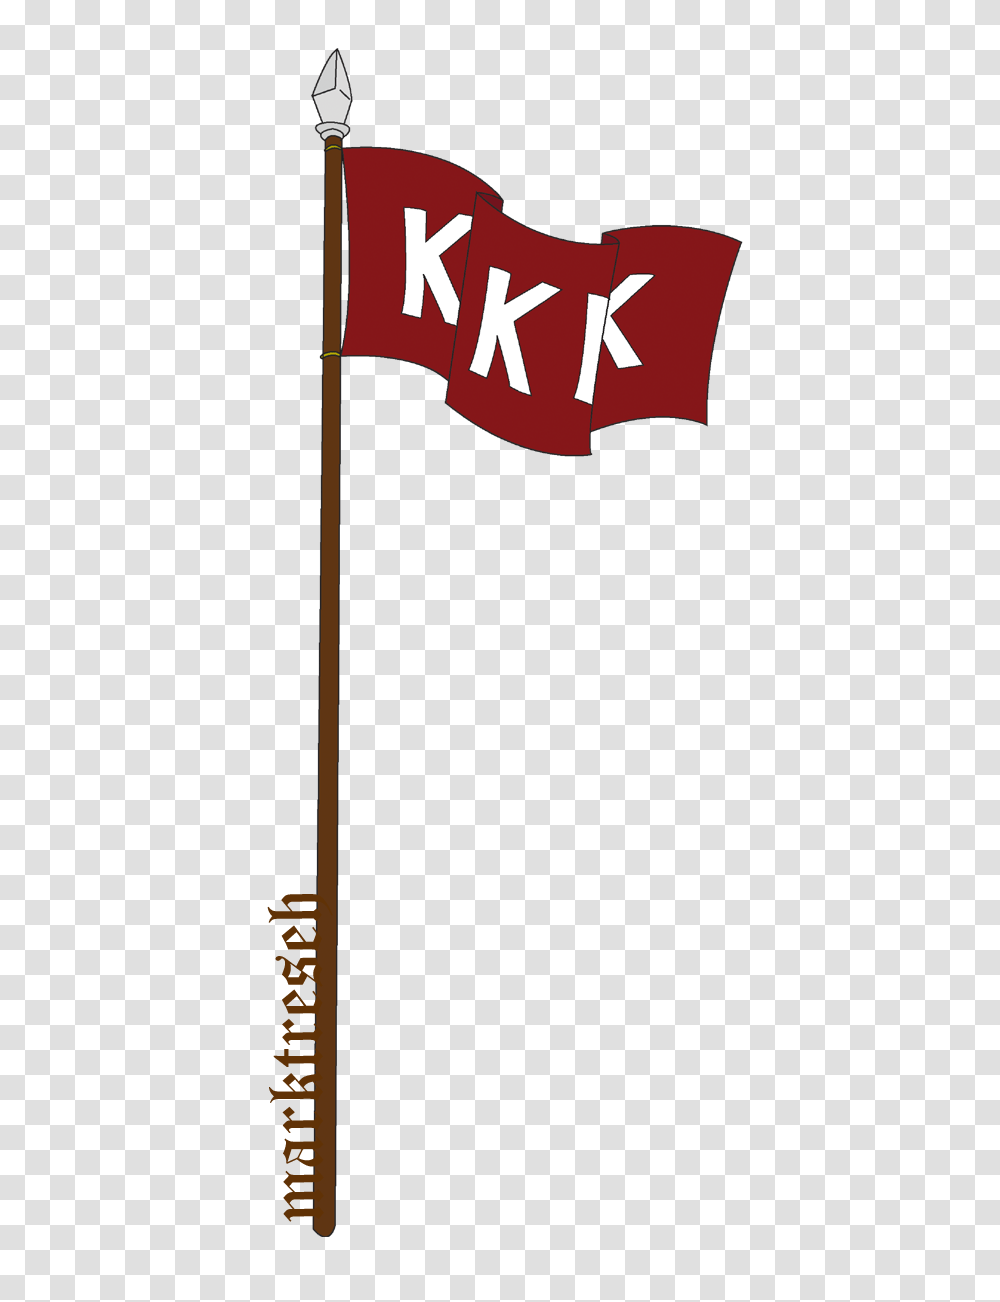 Kkk Flag Image, Arrow, White Board Transparent Png